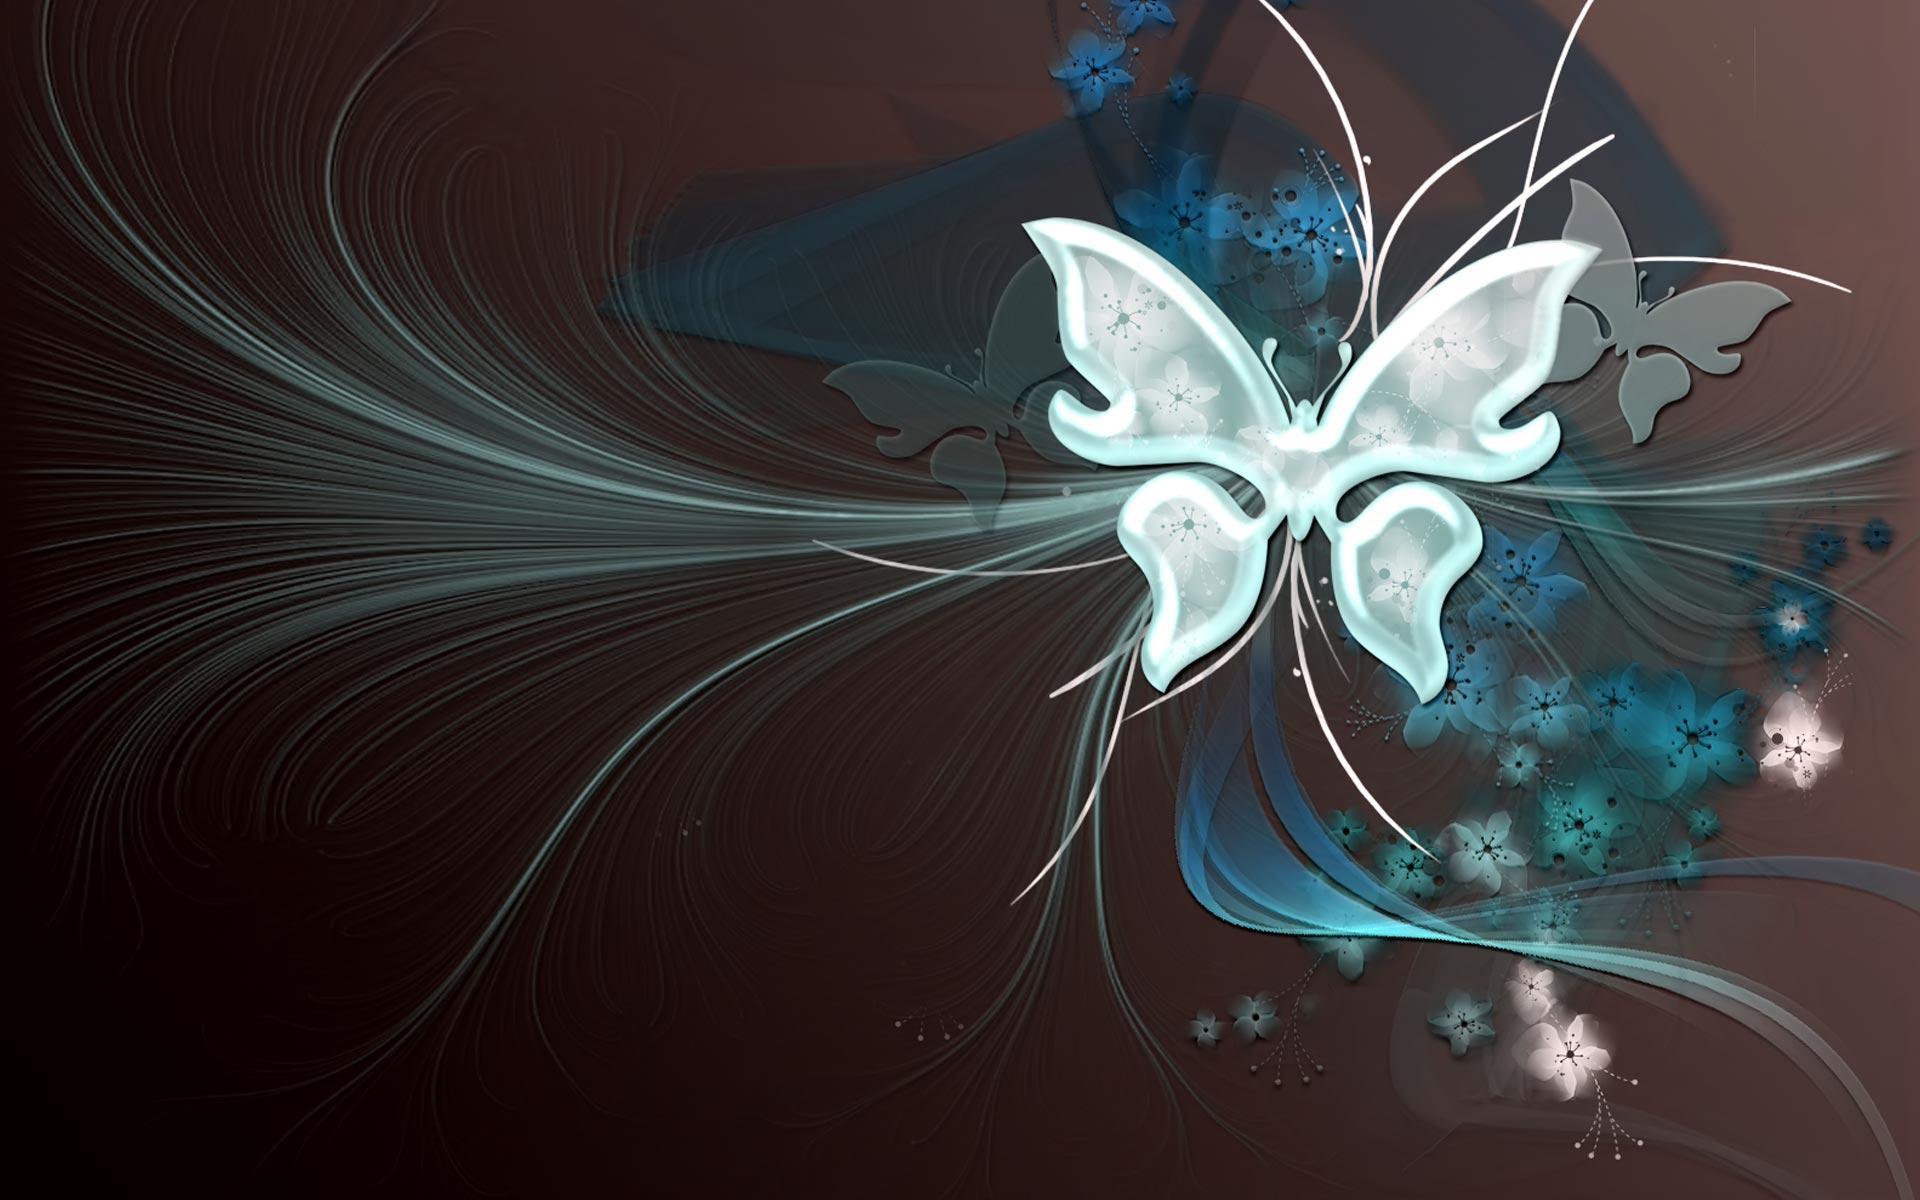 Butterfly Desktop Wallpaper. Piccry.com: Picture Idea Gallery